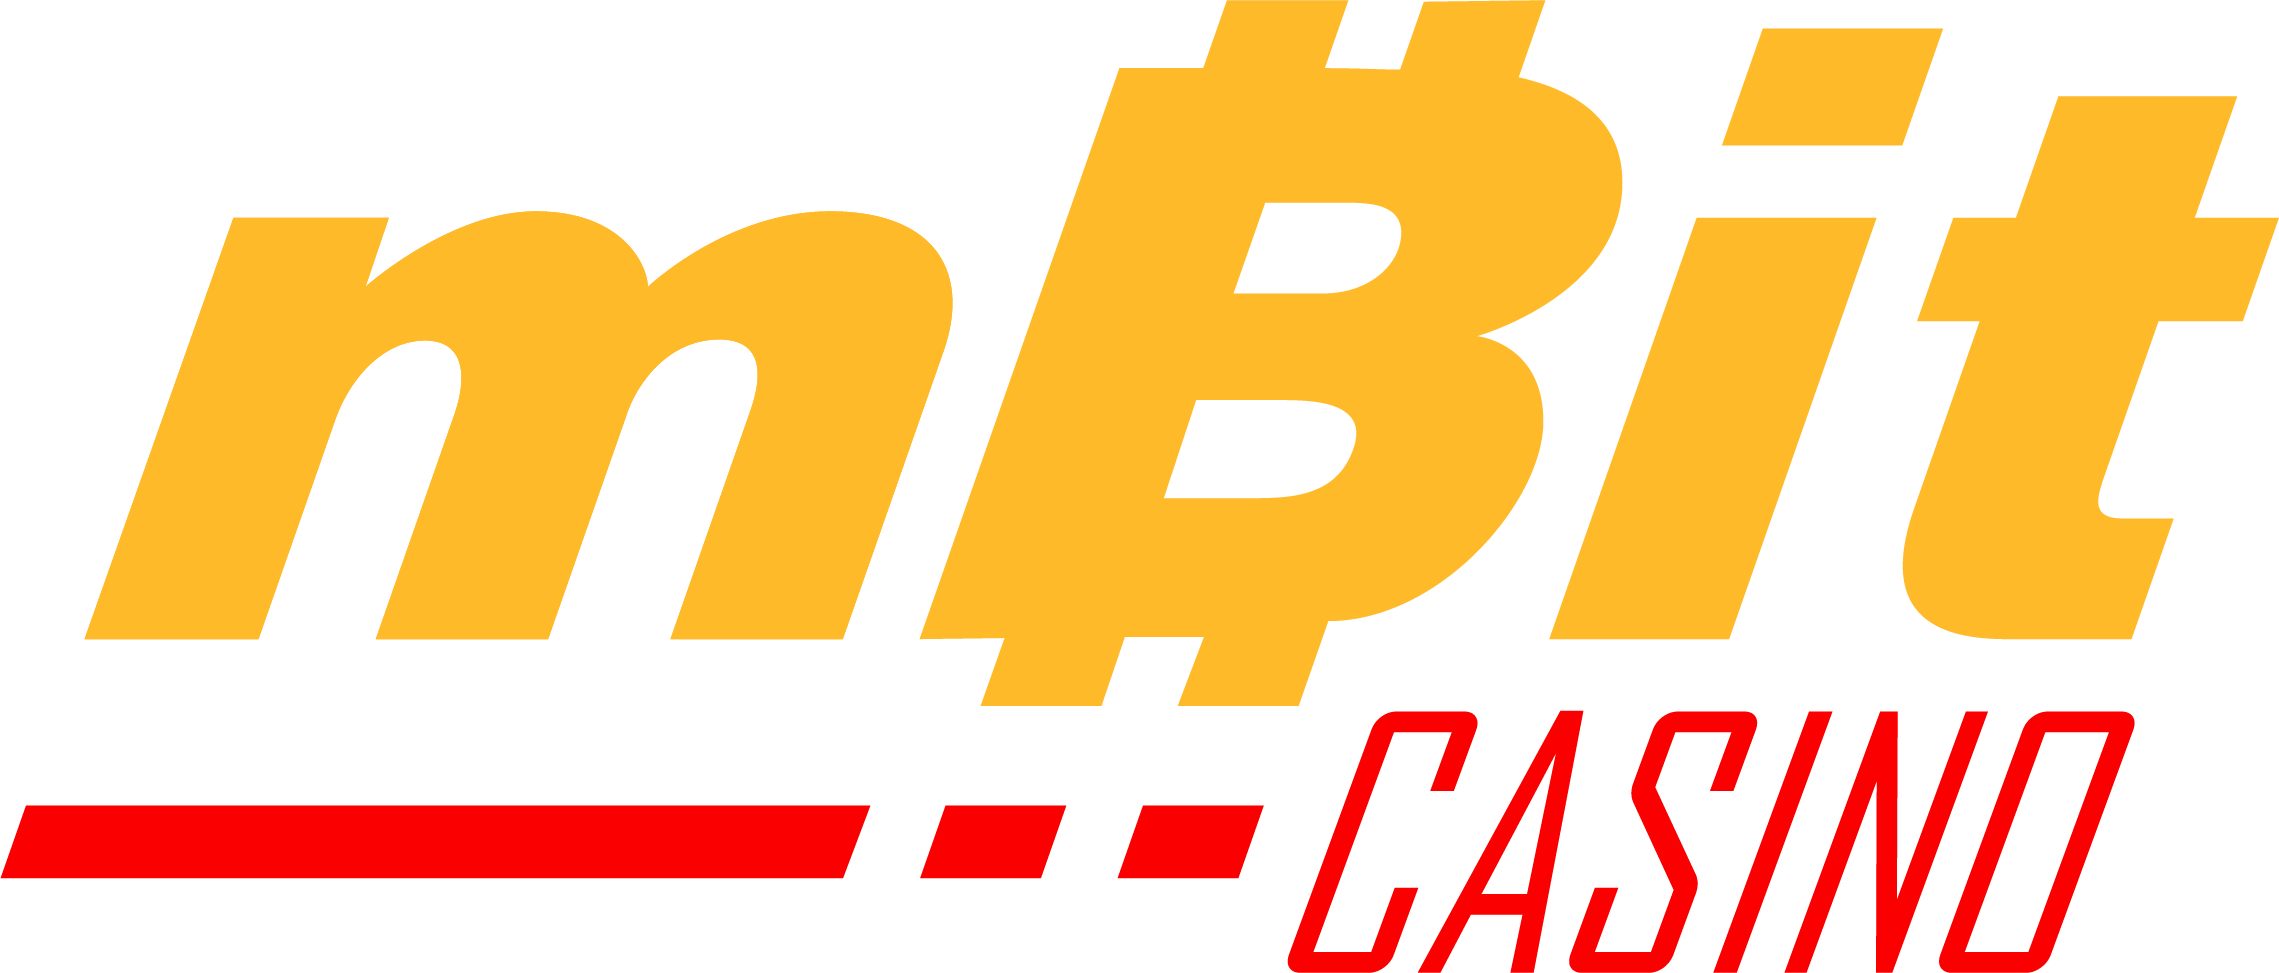 mBitcasino logotype